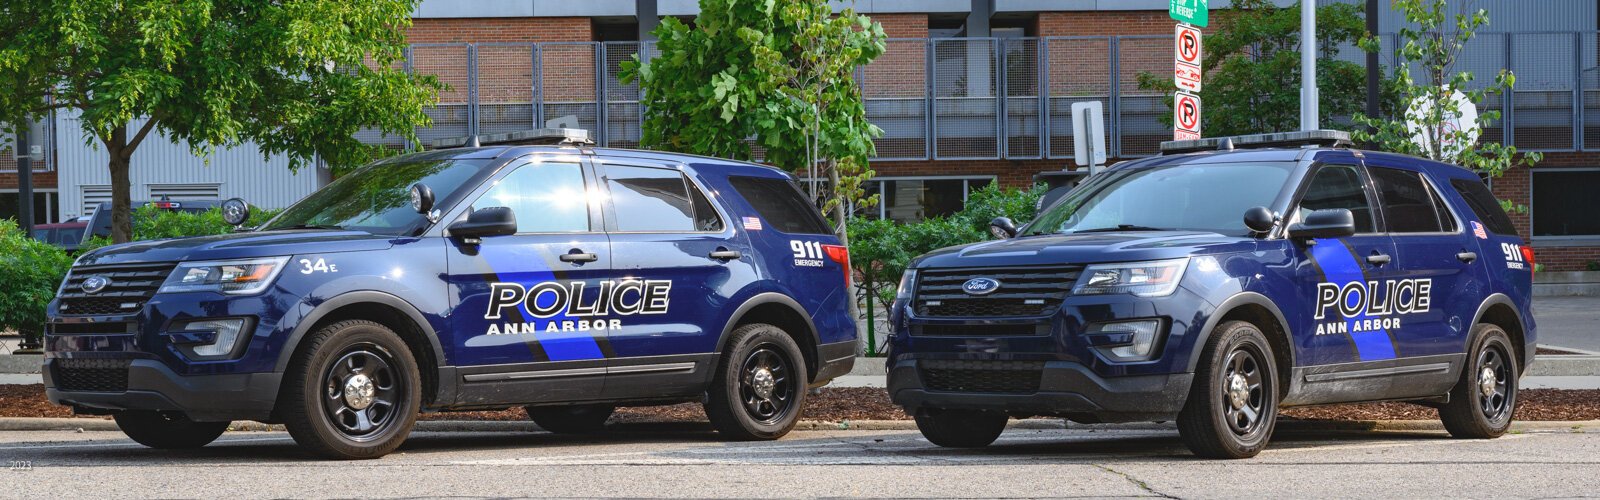 Ann Arbor Police cars at Larcom City Hall.